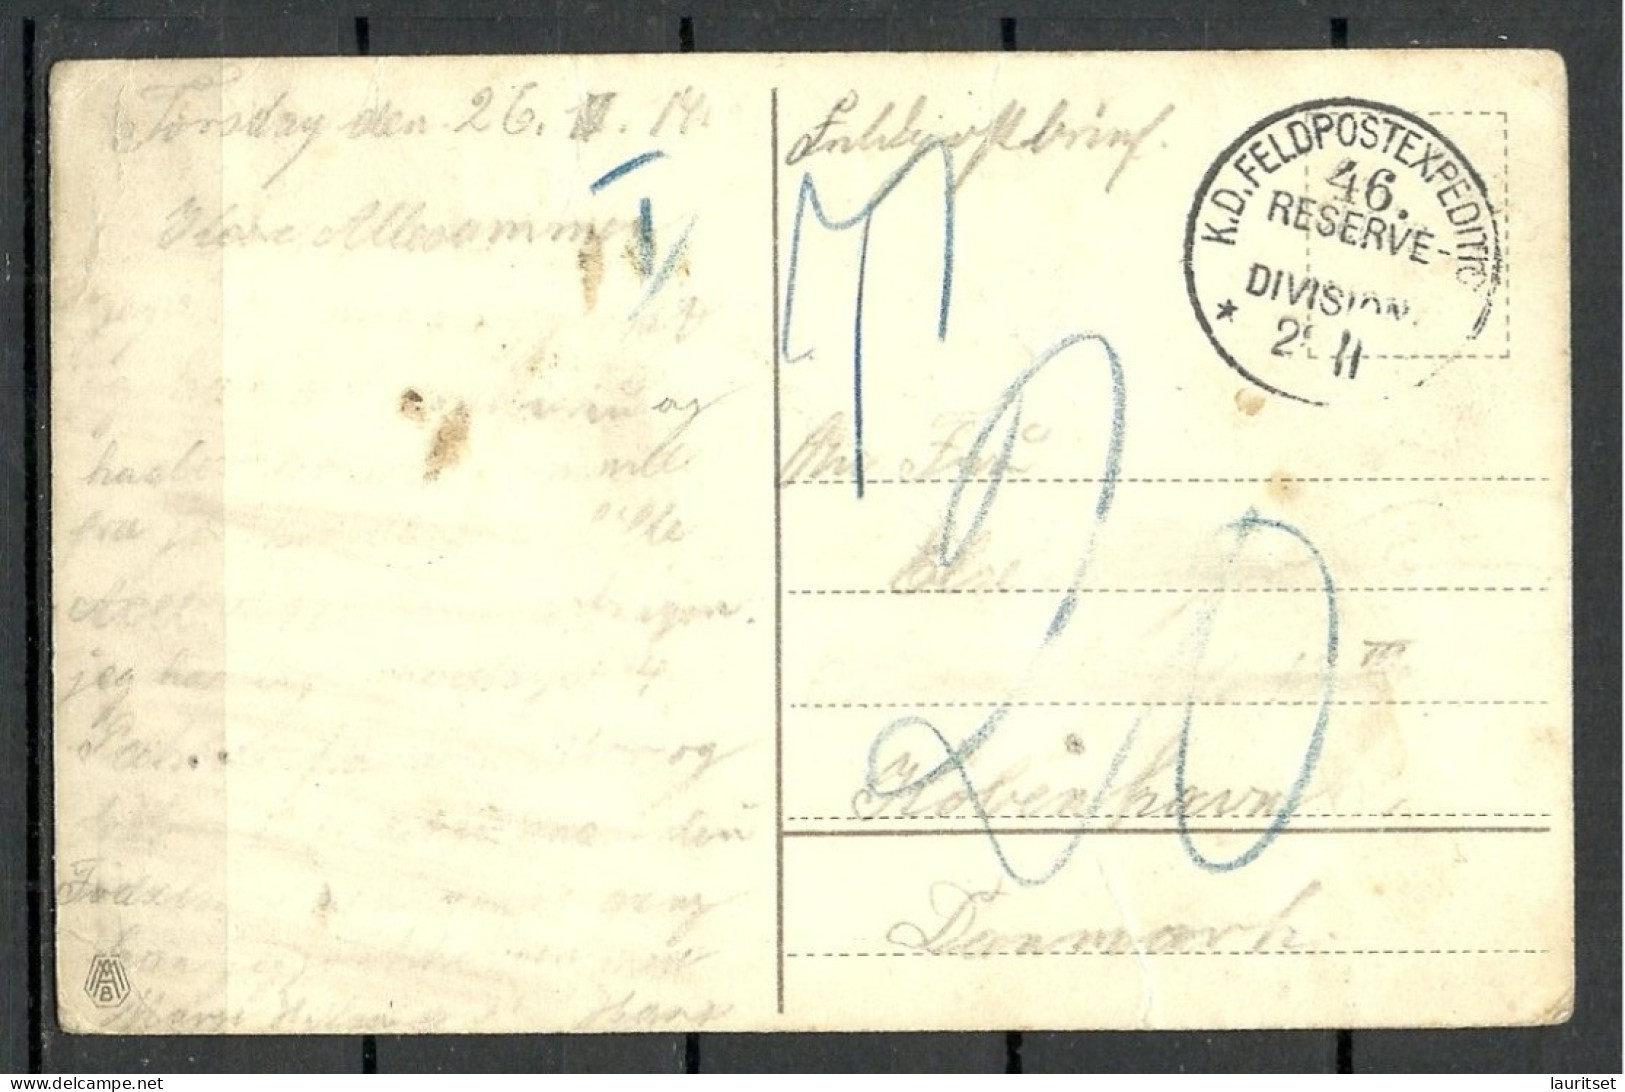 BELGIUM Belgique 1914 Field Post Feldpost K. D. Feldpostexpedition 46. Reserve, Sent To Denmark Mes Meilleurs Voeux - Covers & Documents